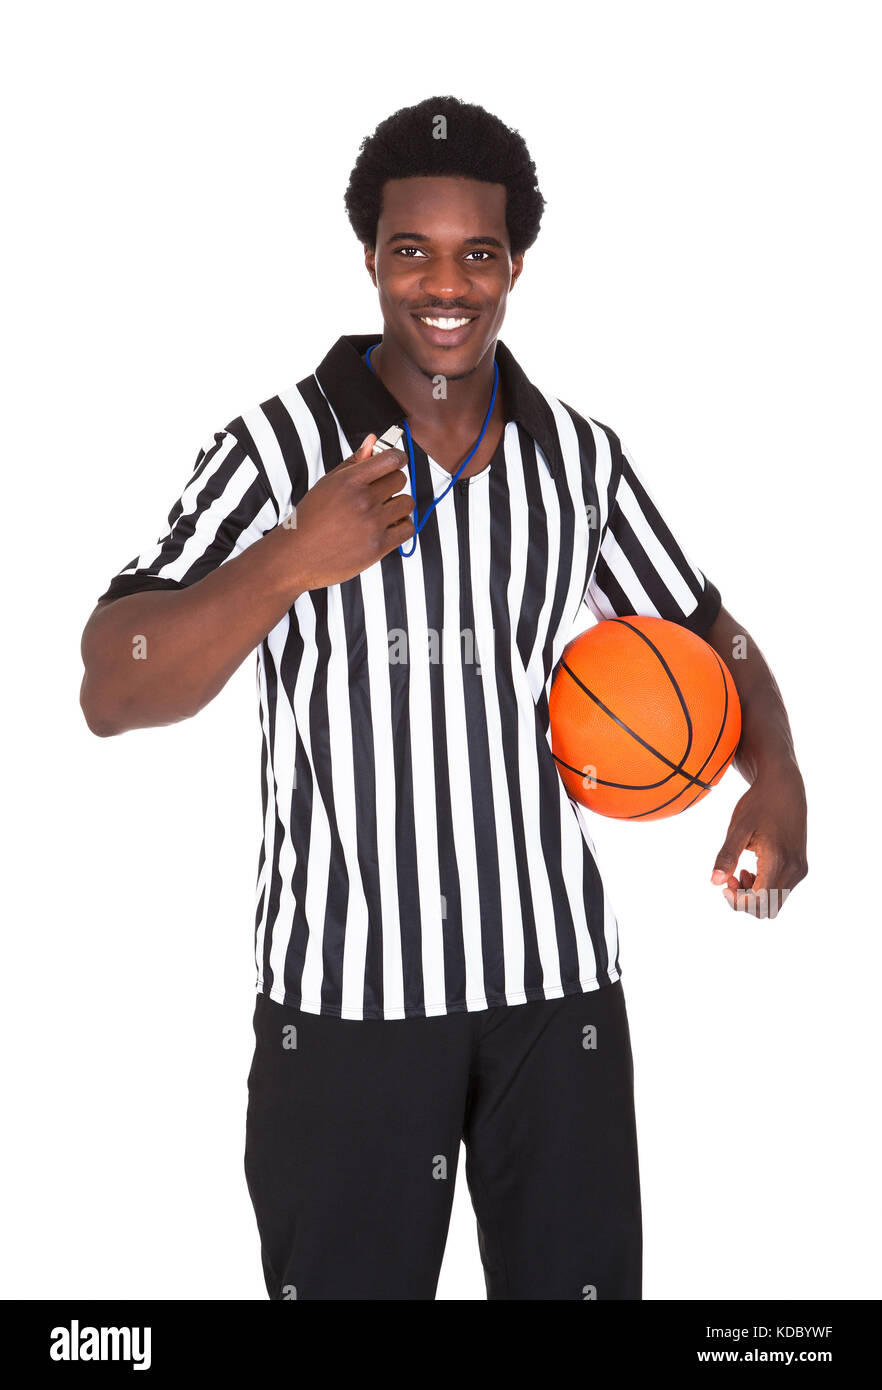 Arbitro baloncesto fotografías e imágenes de alta resolución - Alamy